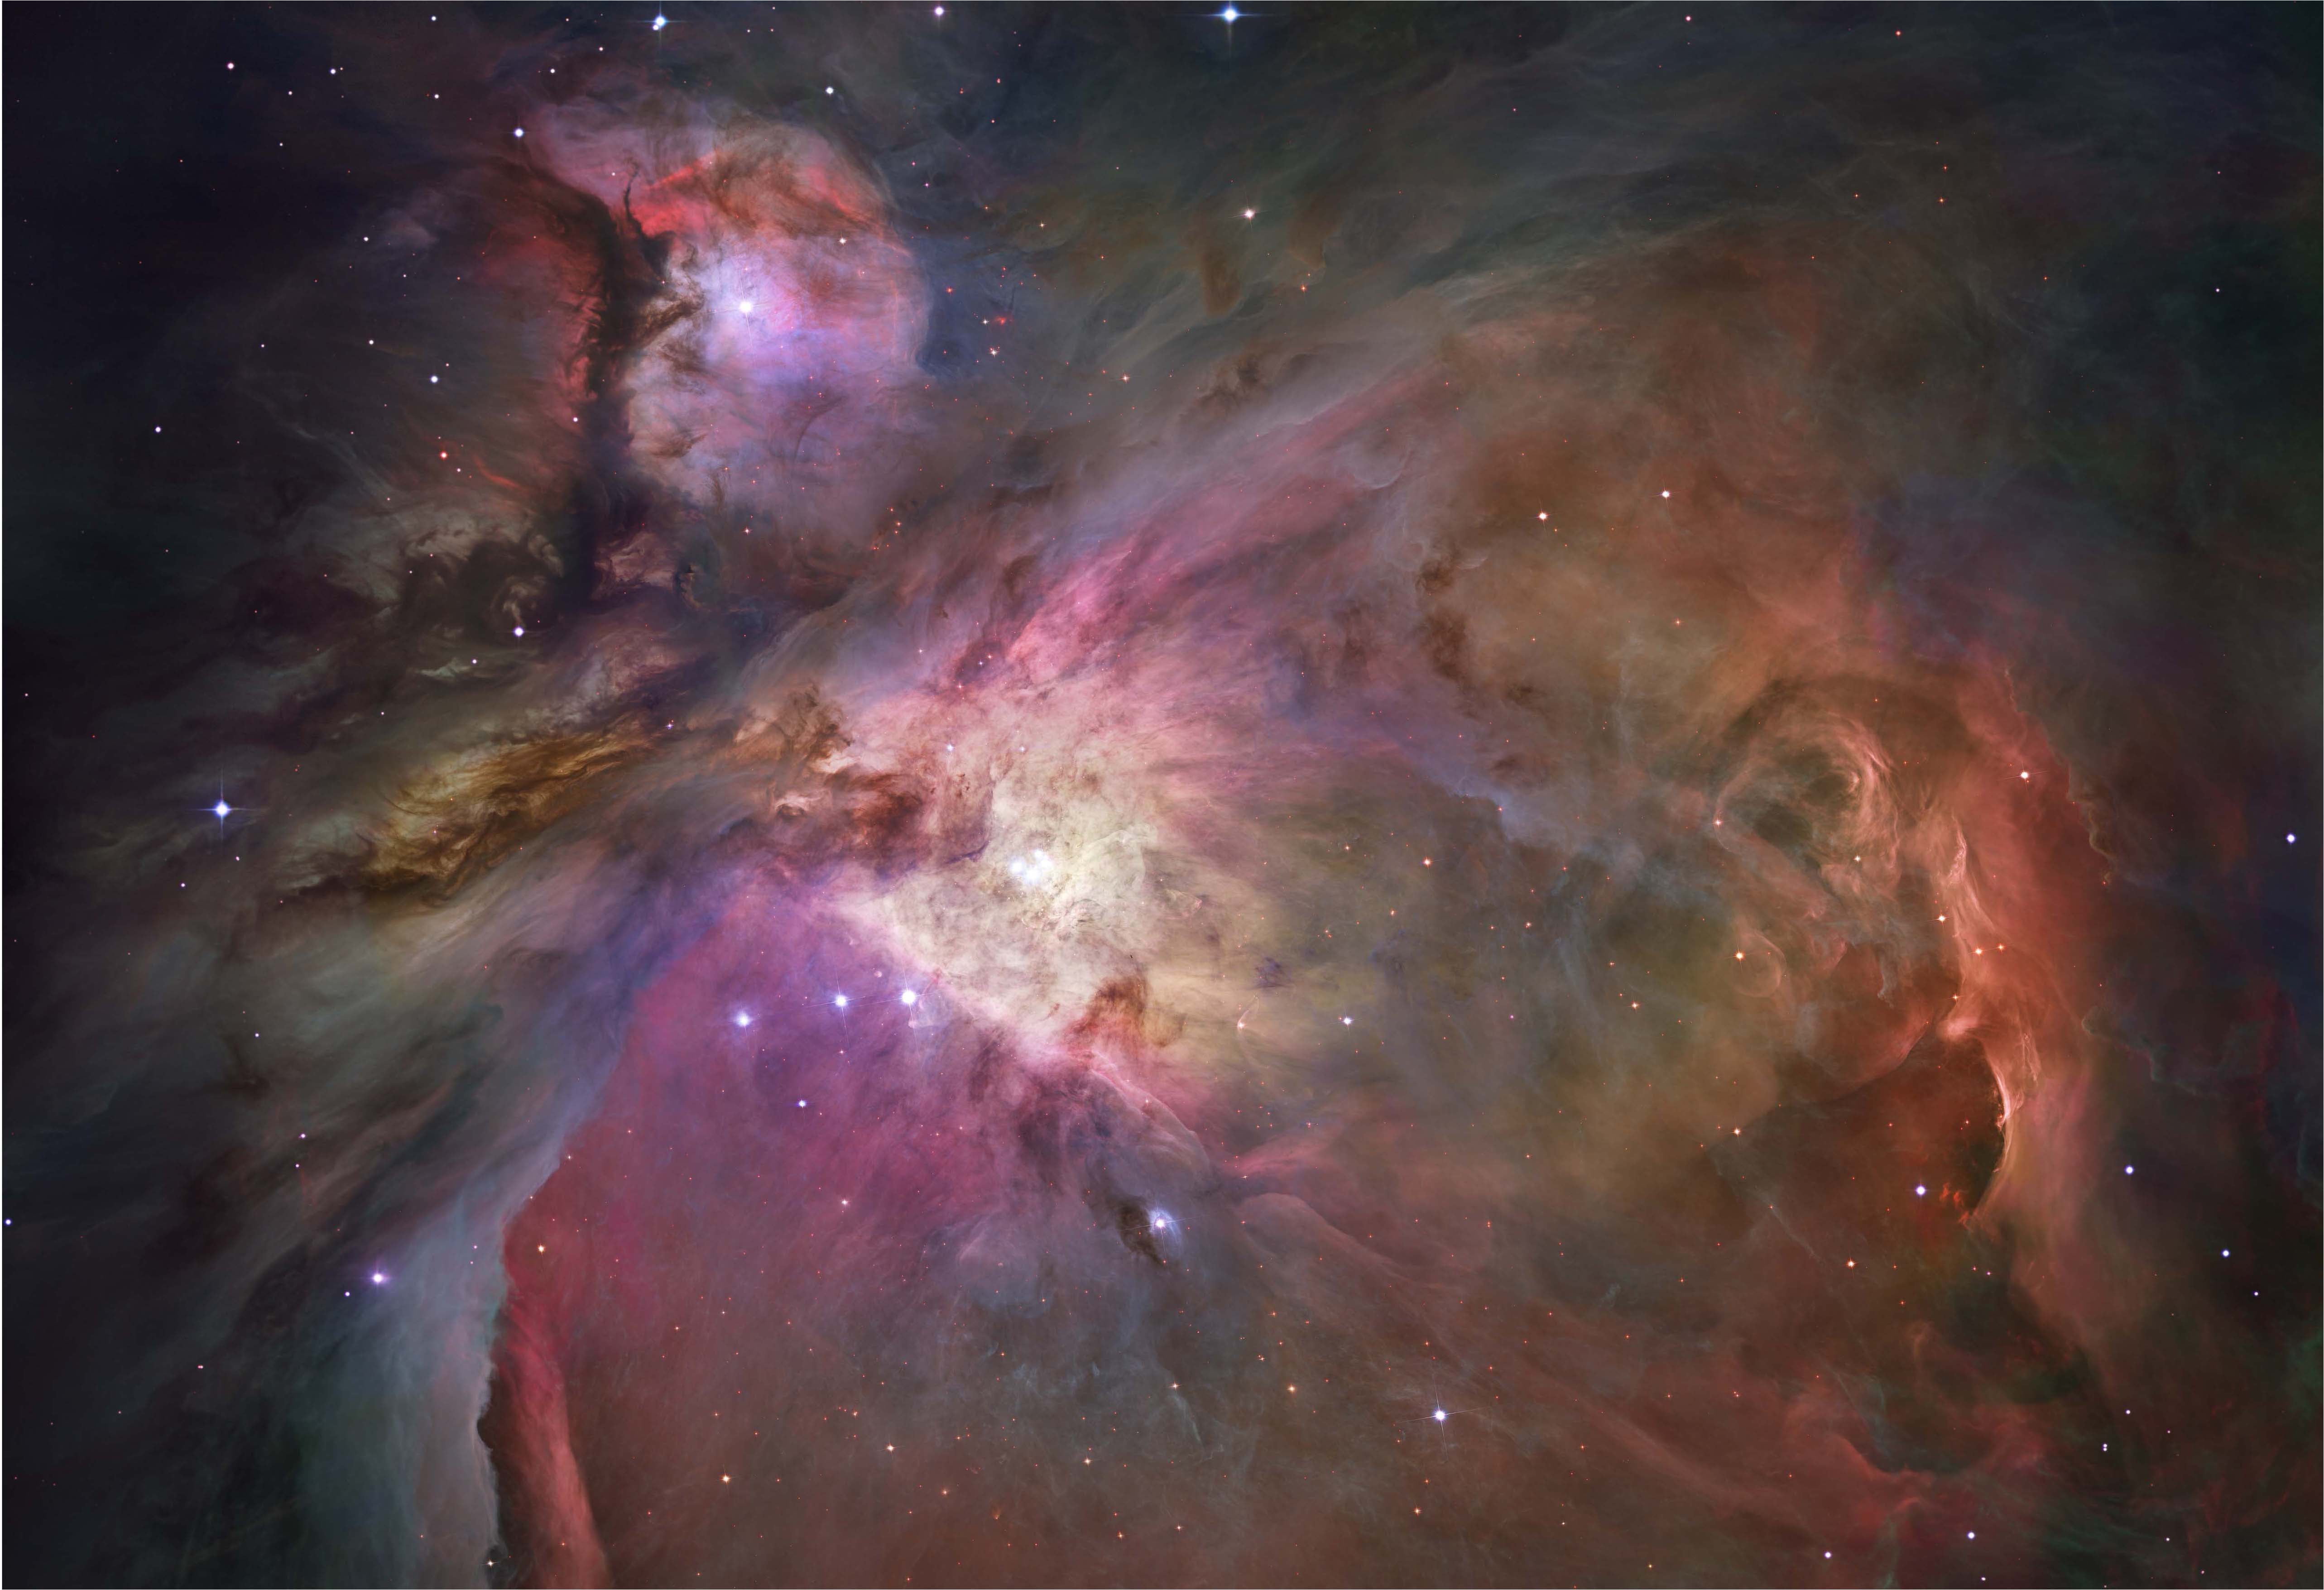 THE BUG NEBULA Hubble Space Telescope image POSTER 24X36 surprising details 